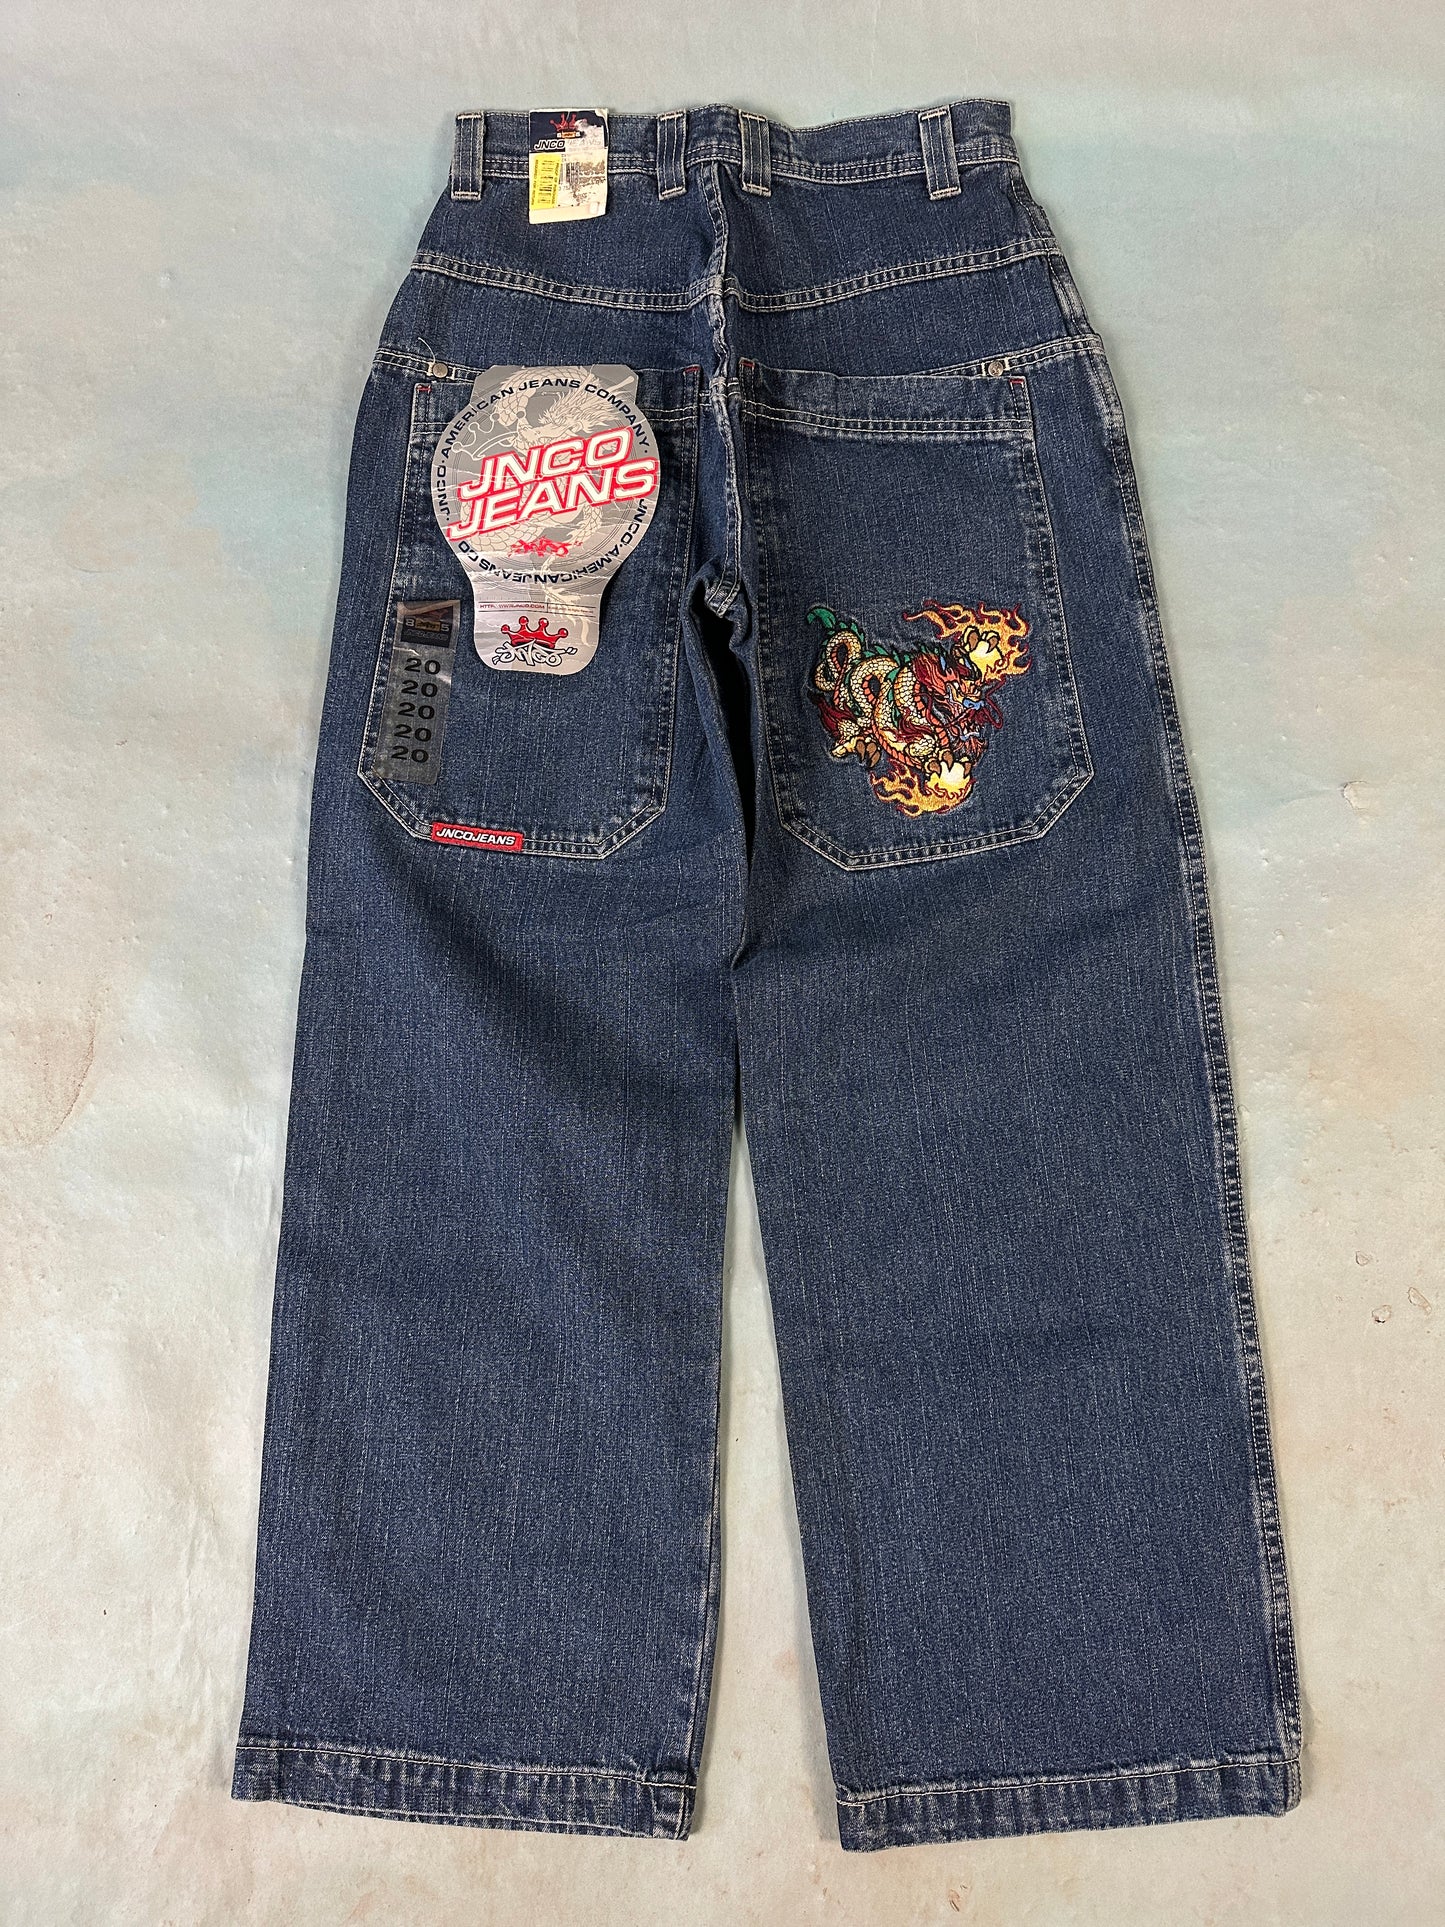 Deadstock JNCO Dragon Vintage Baggy Jeans - 30 x 29